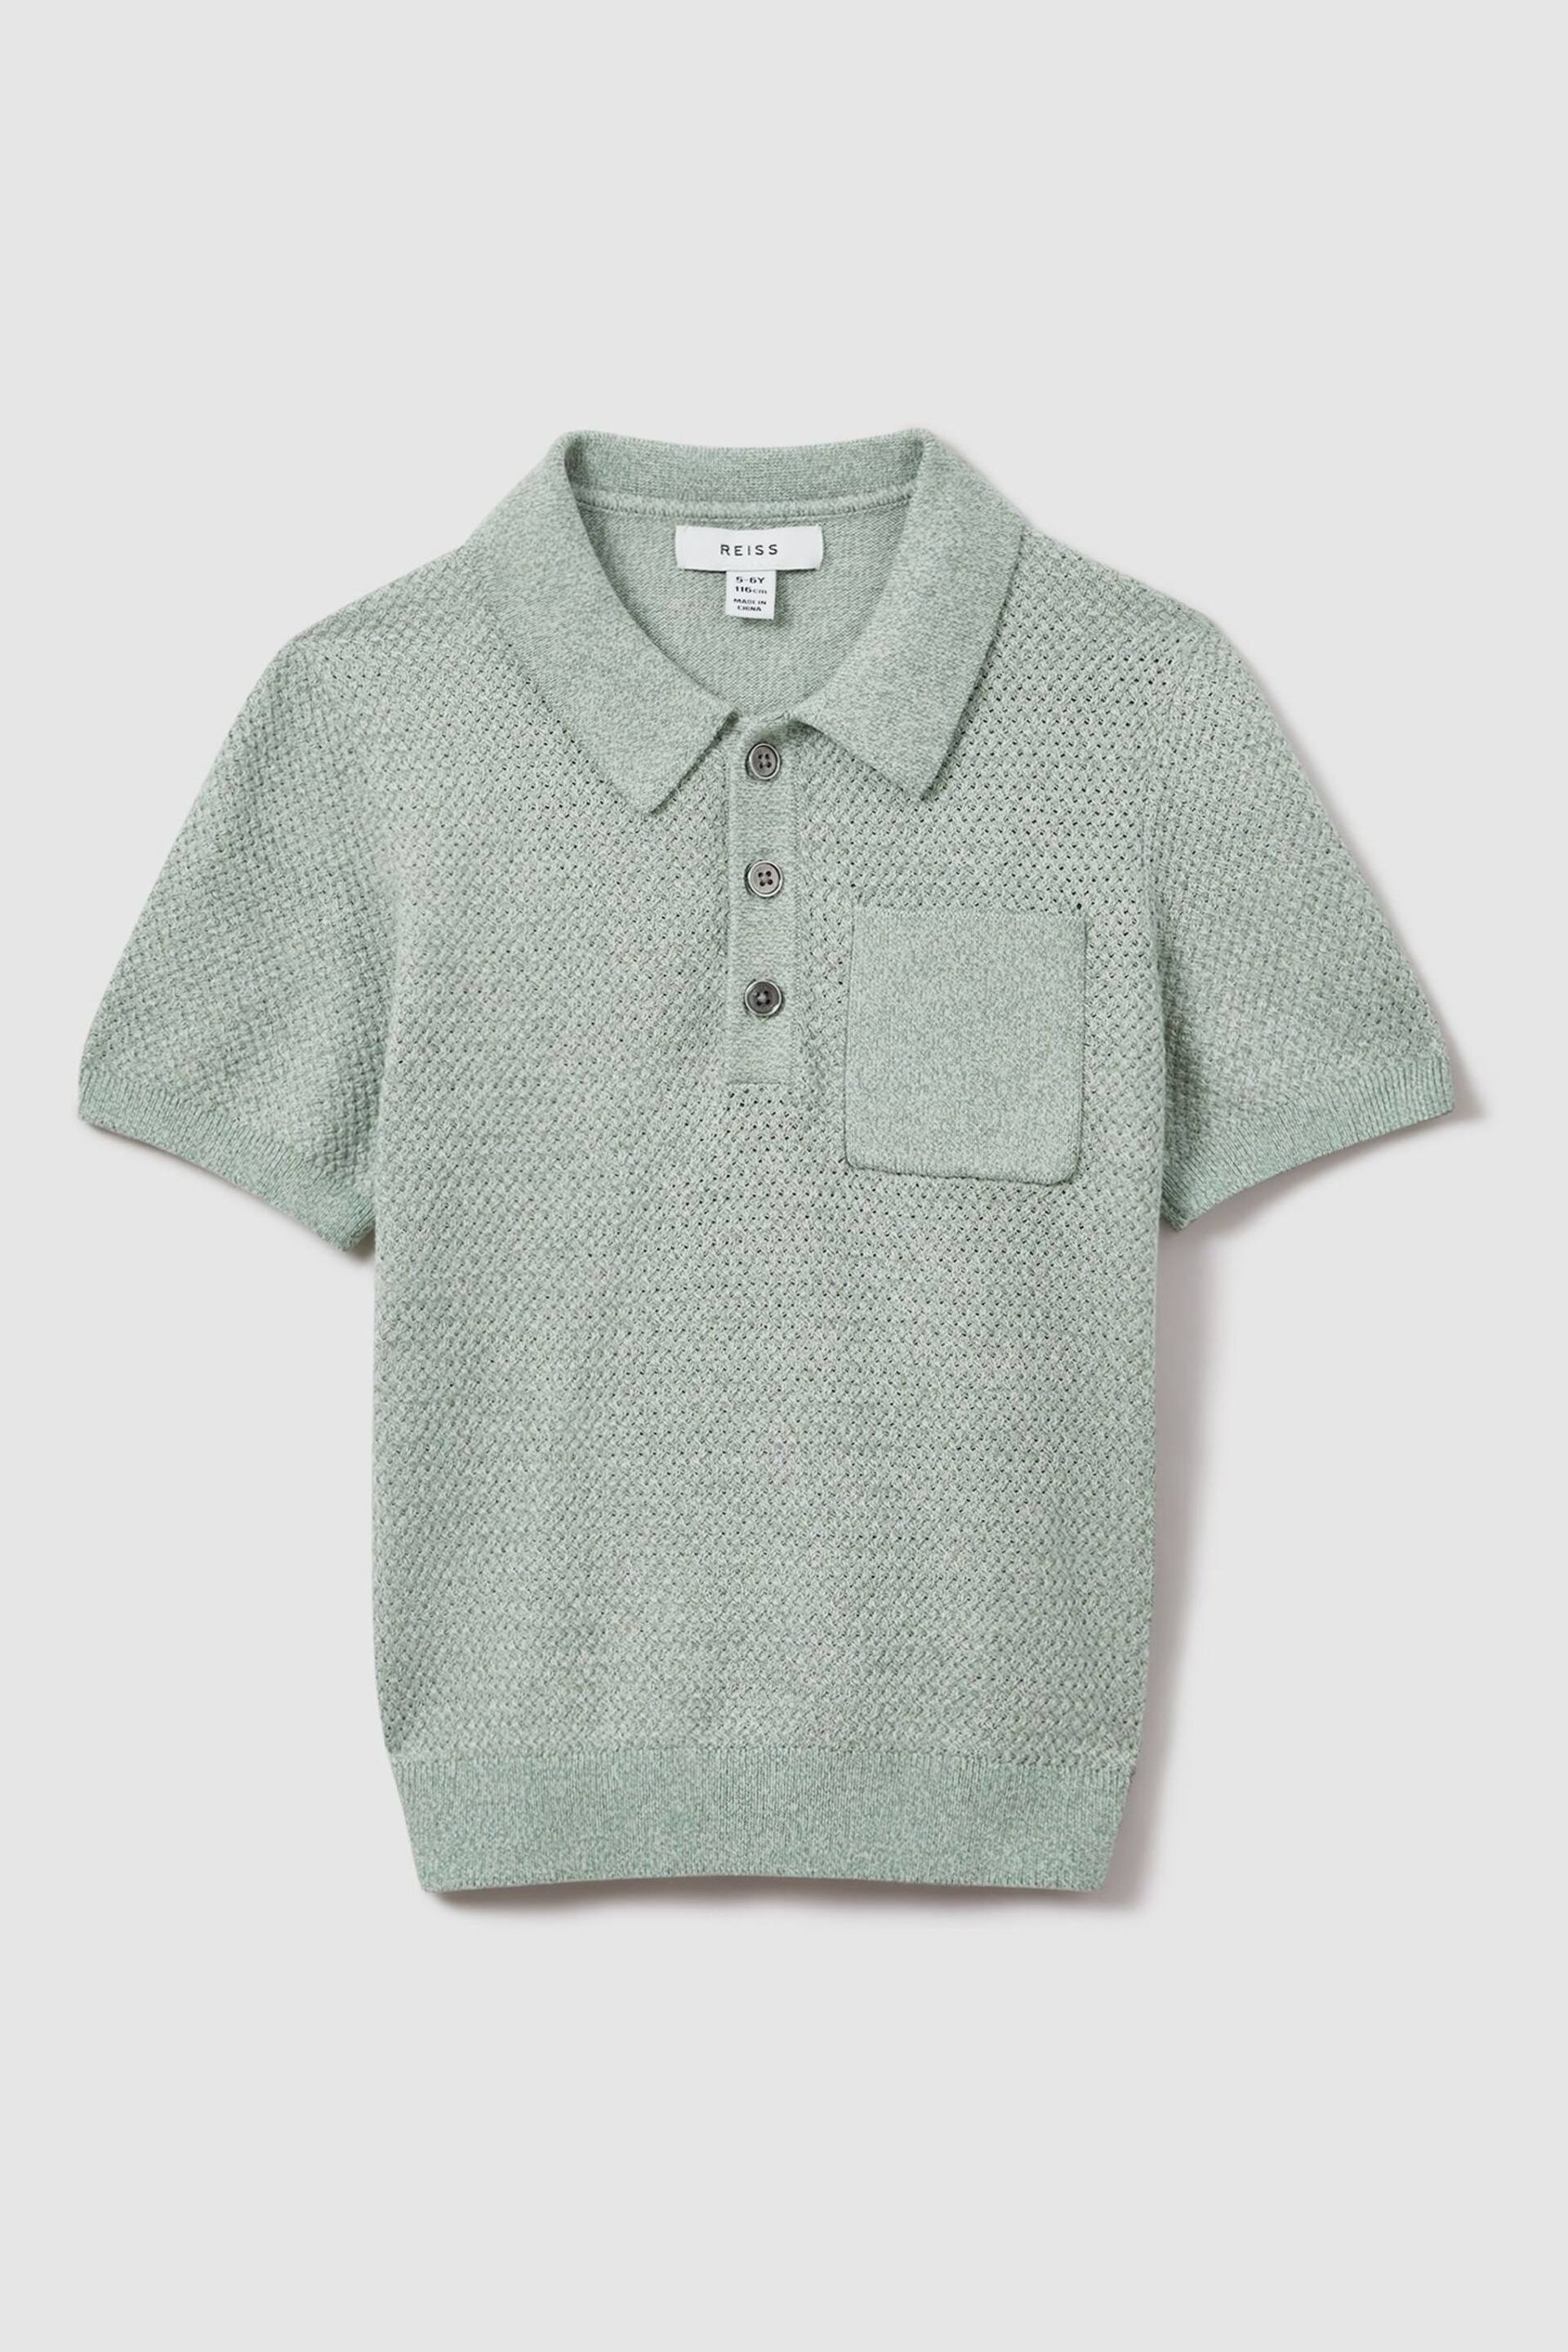 Reiss Sage Melange Demetri Junior Textured Cotton Polo Shirt - Image 2 of 4